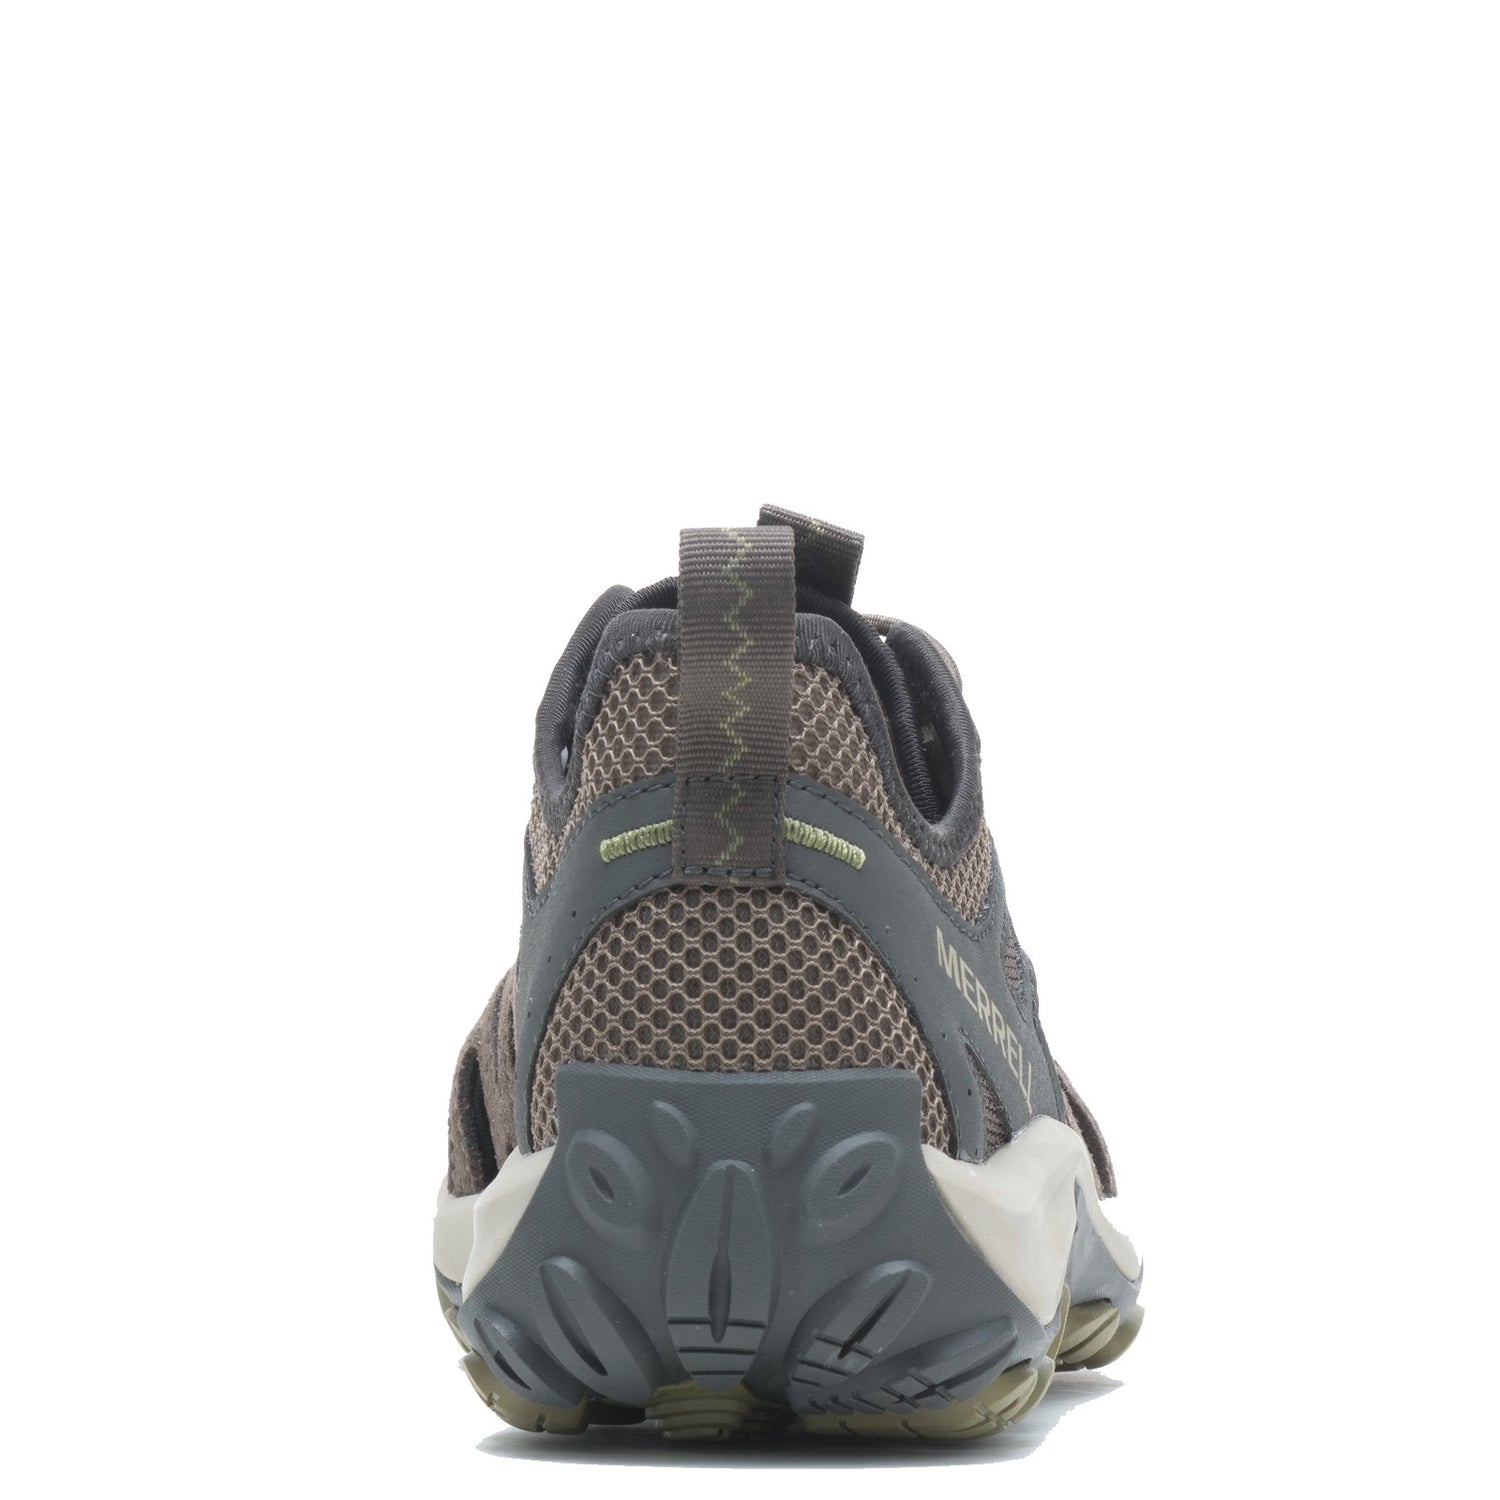 Peltz Shoes  Men's Merrell Accentor 3 Sieve Hiking Sandal BOULDER J135179